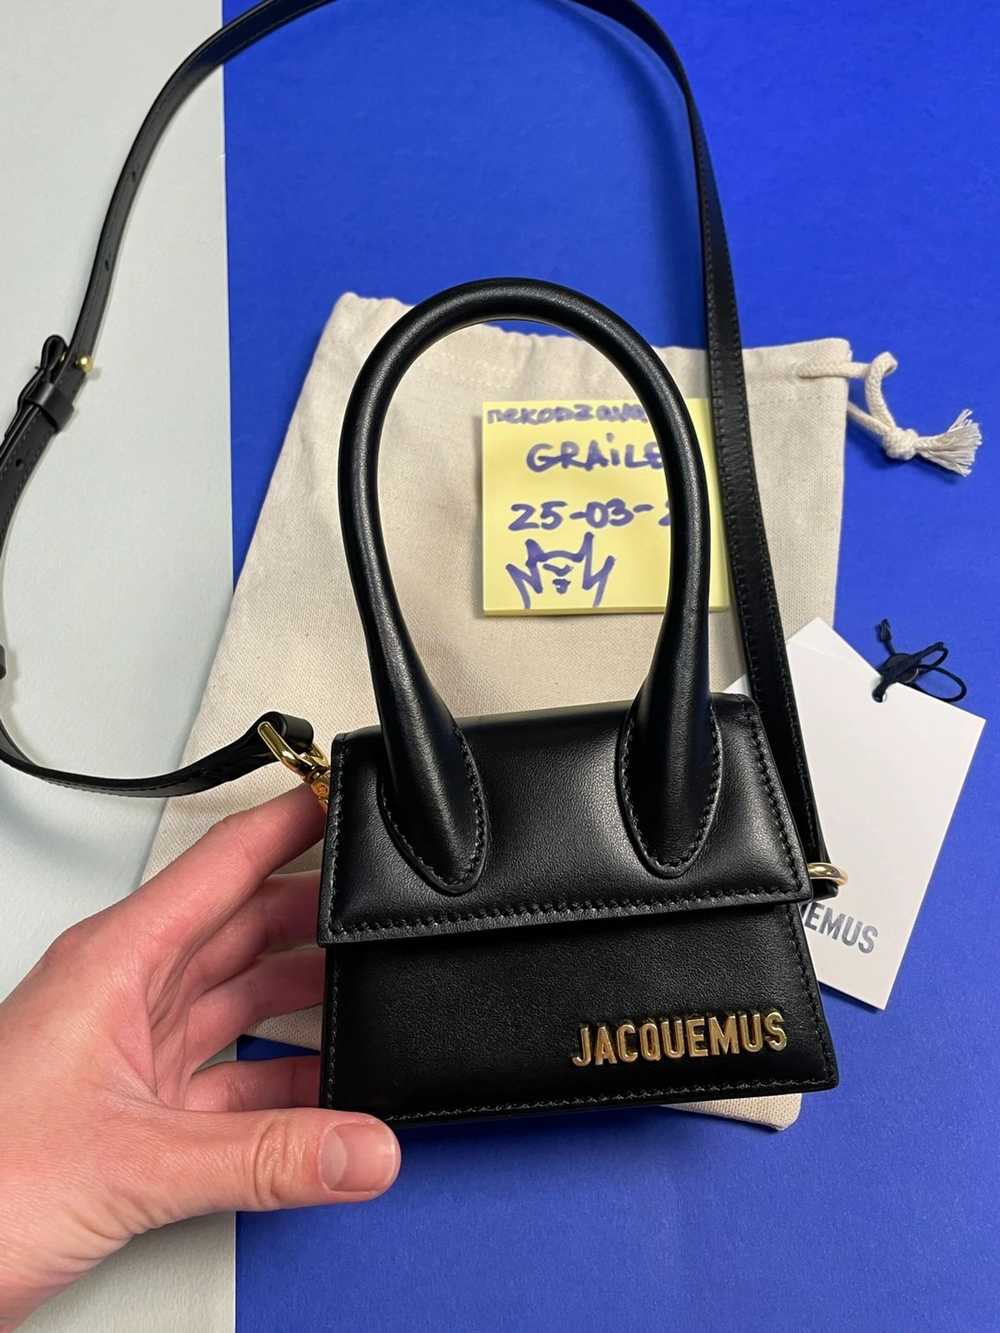 Jacquemus Jacquemus Le Chiquito Black Leather Bag - image 1